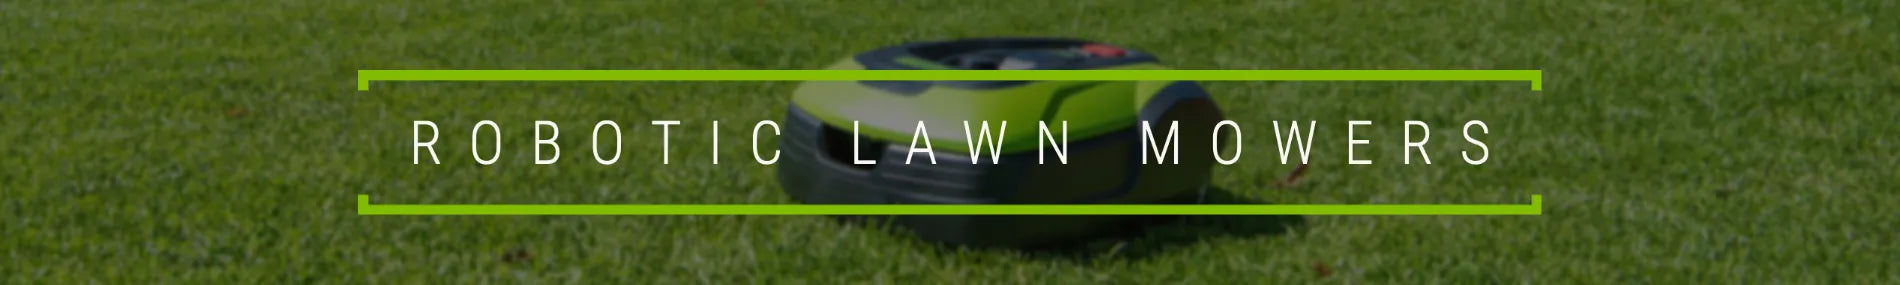 Tool Type: Robotic Lawn Mowers